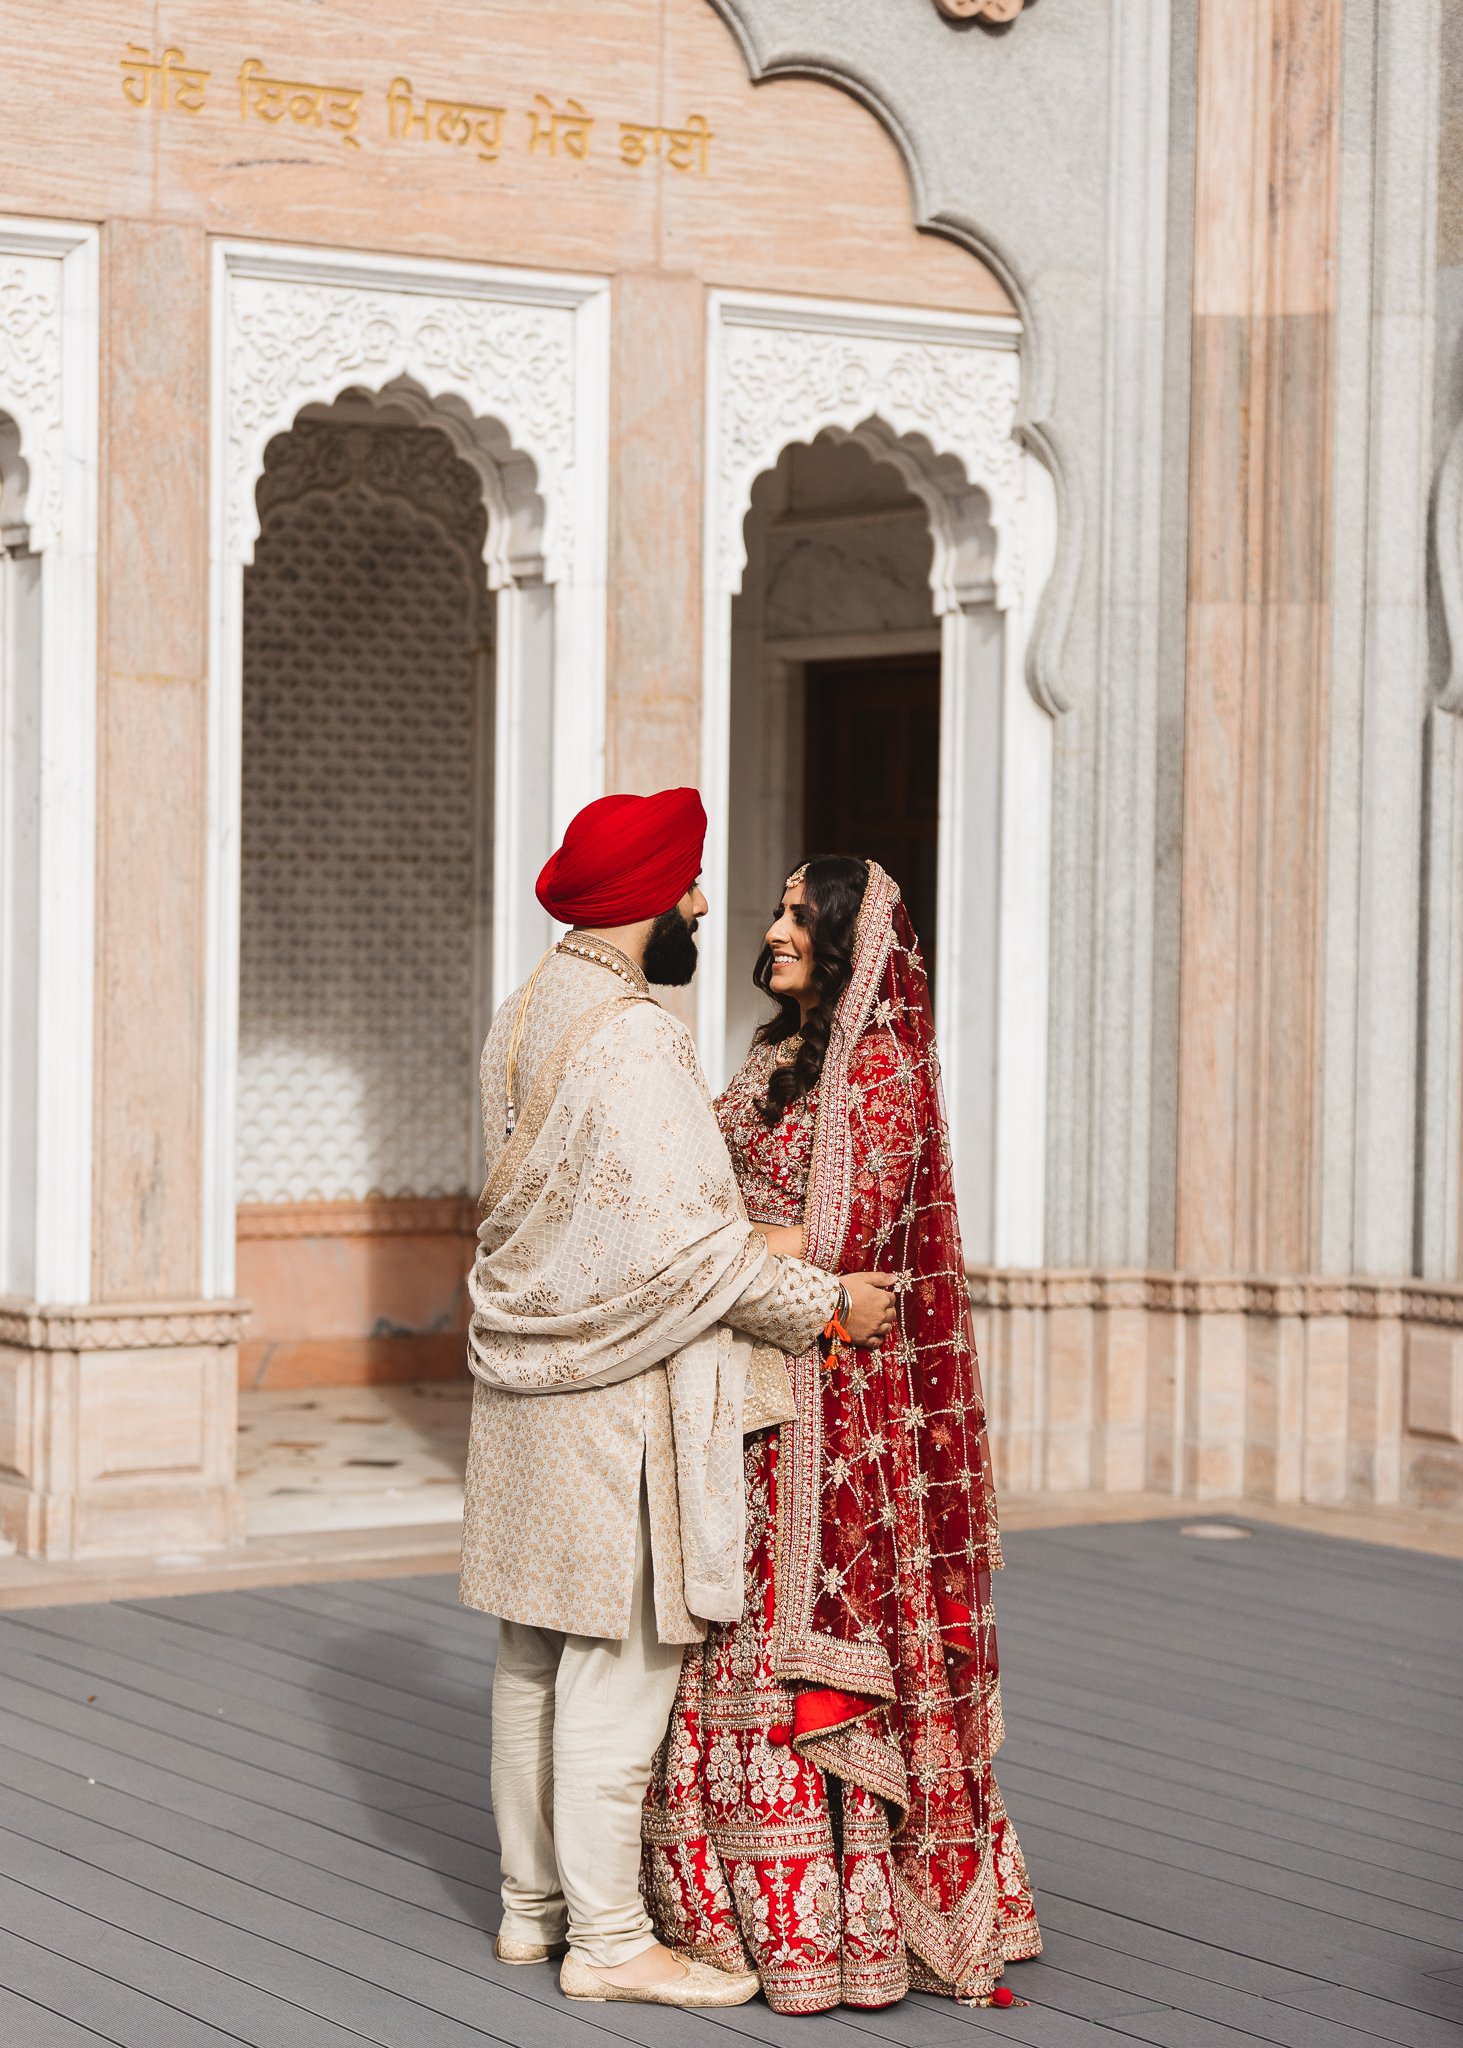 Sikh Gravesend Gurdwara temple wedding-138.jpg